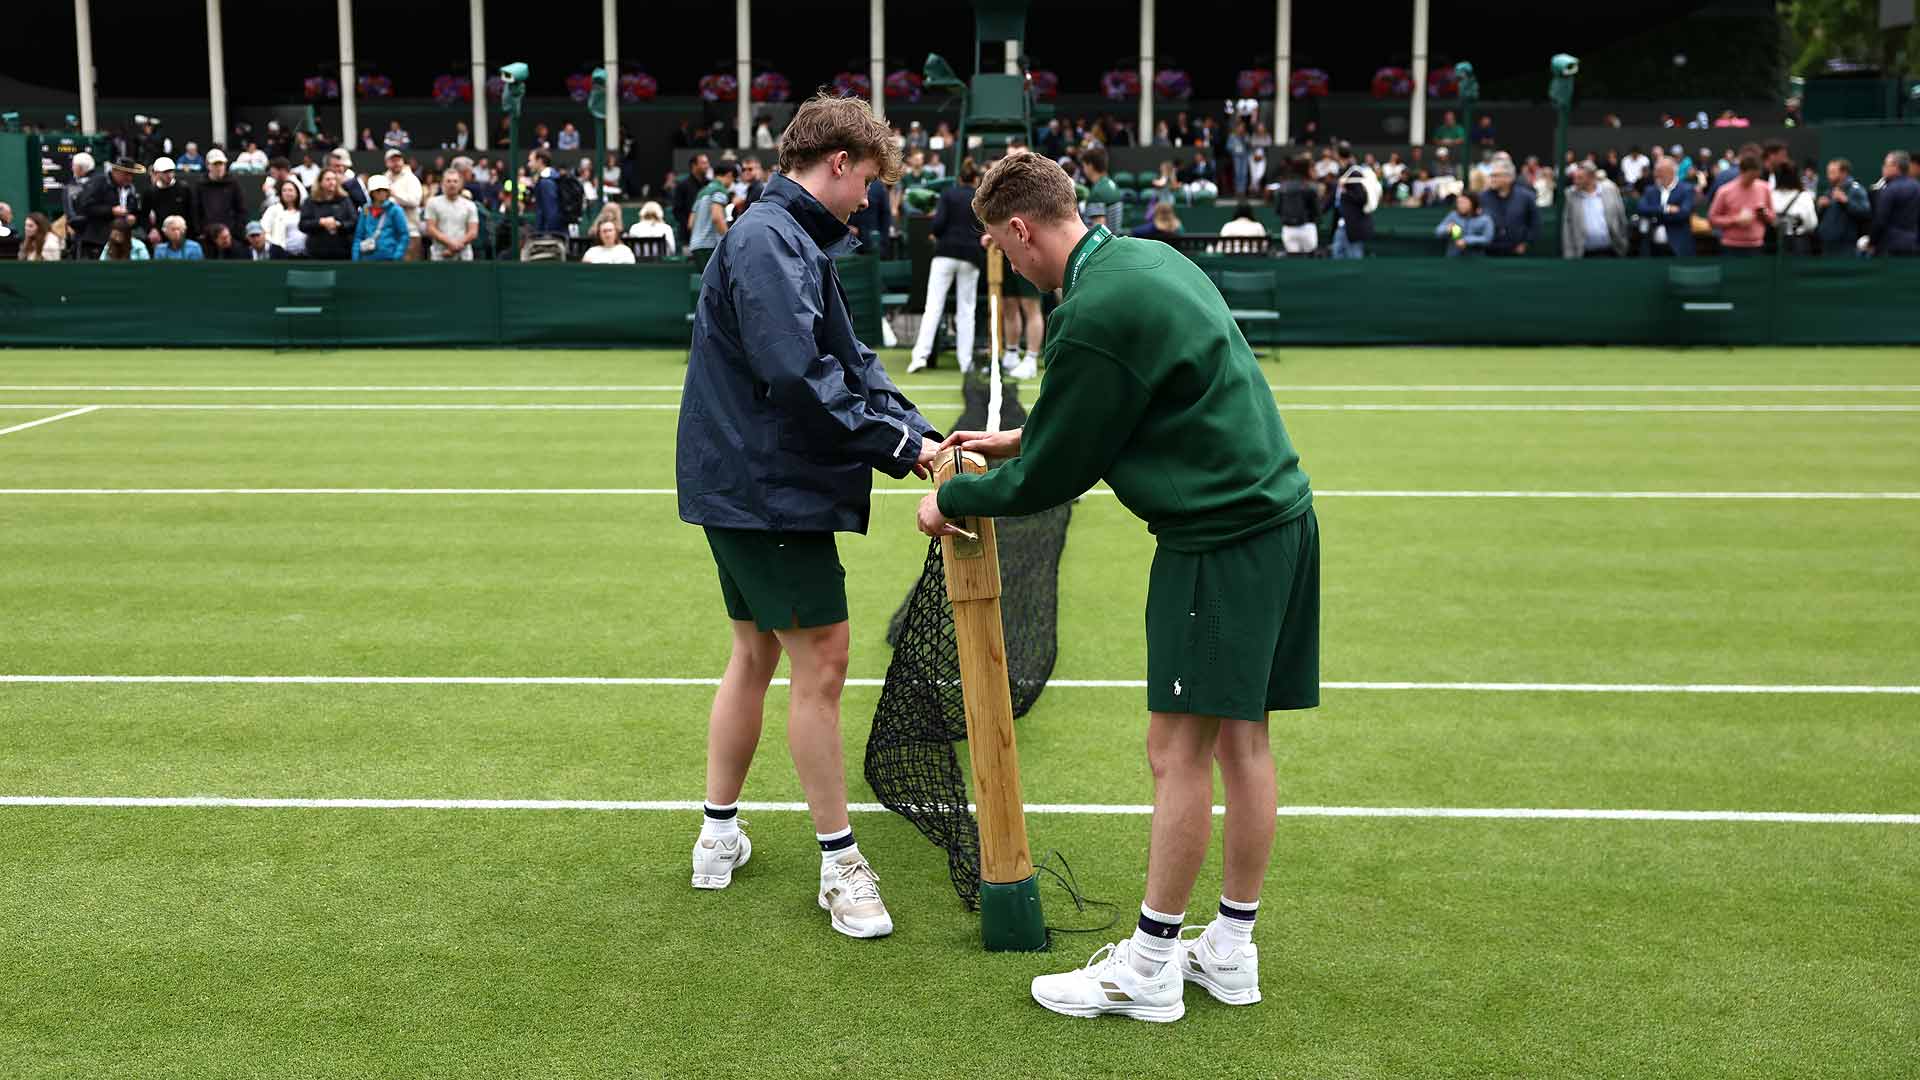 Ground staff put the nets back on court at Wimbledon after rain.